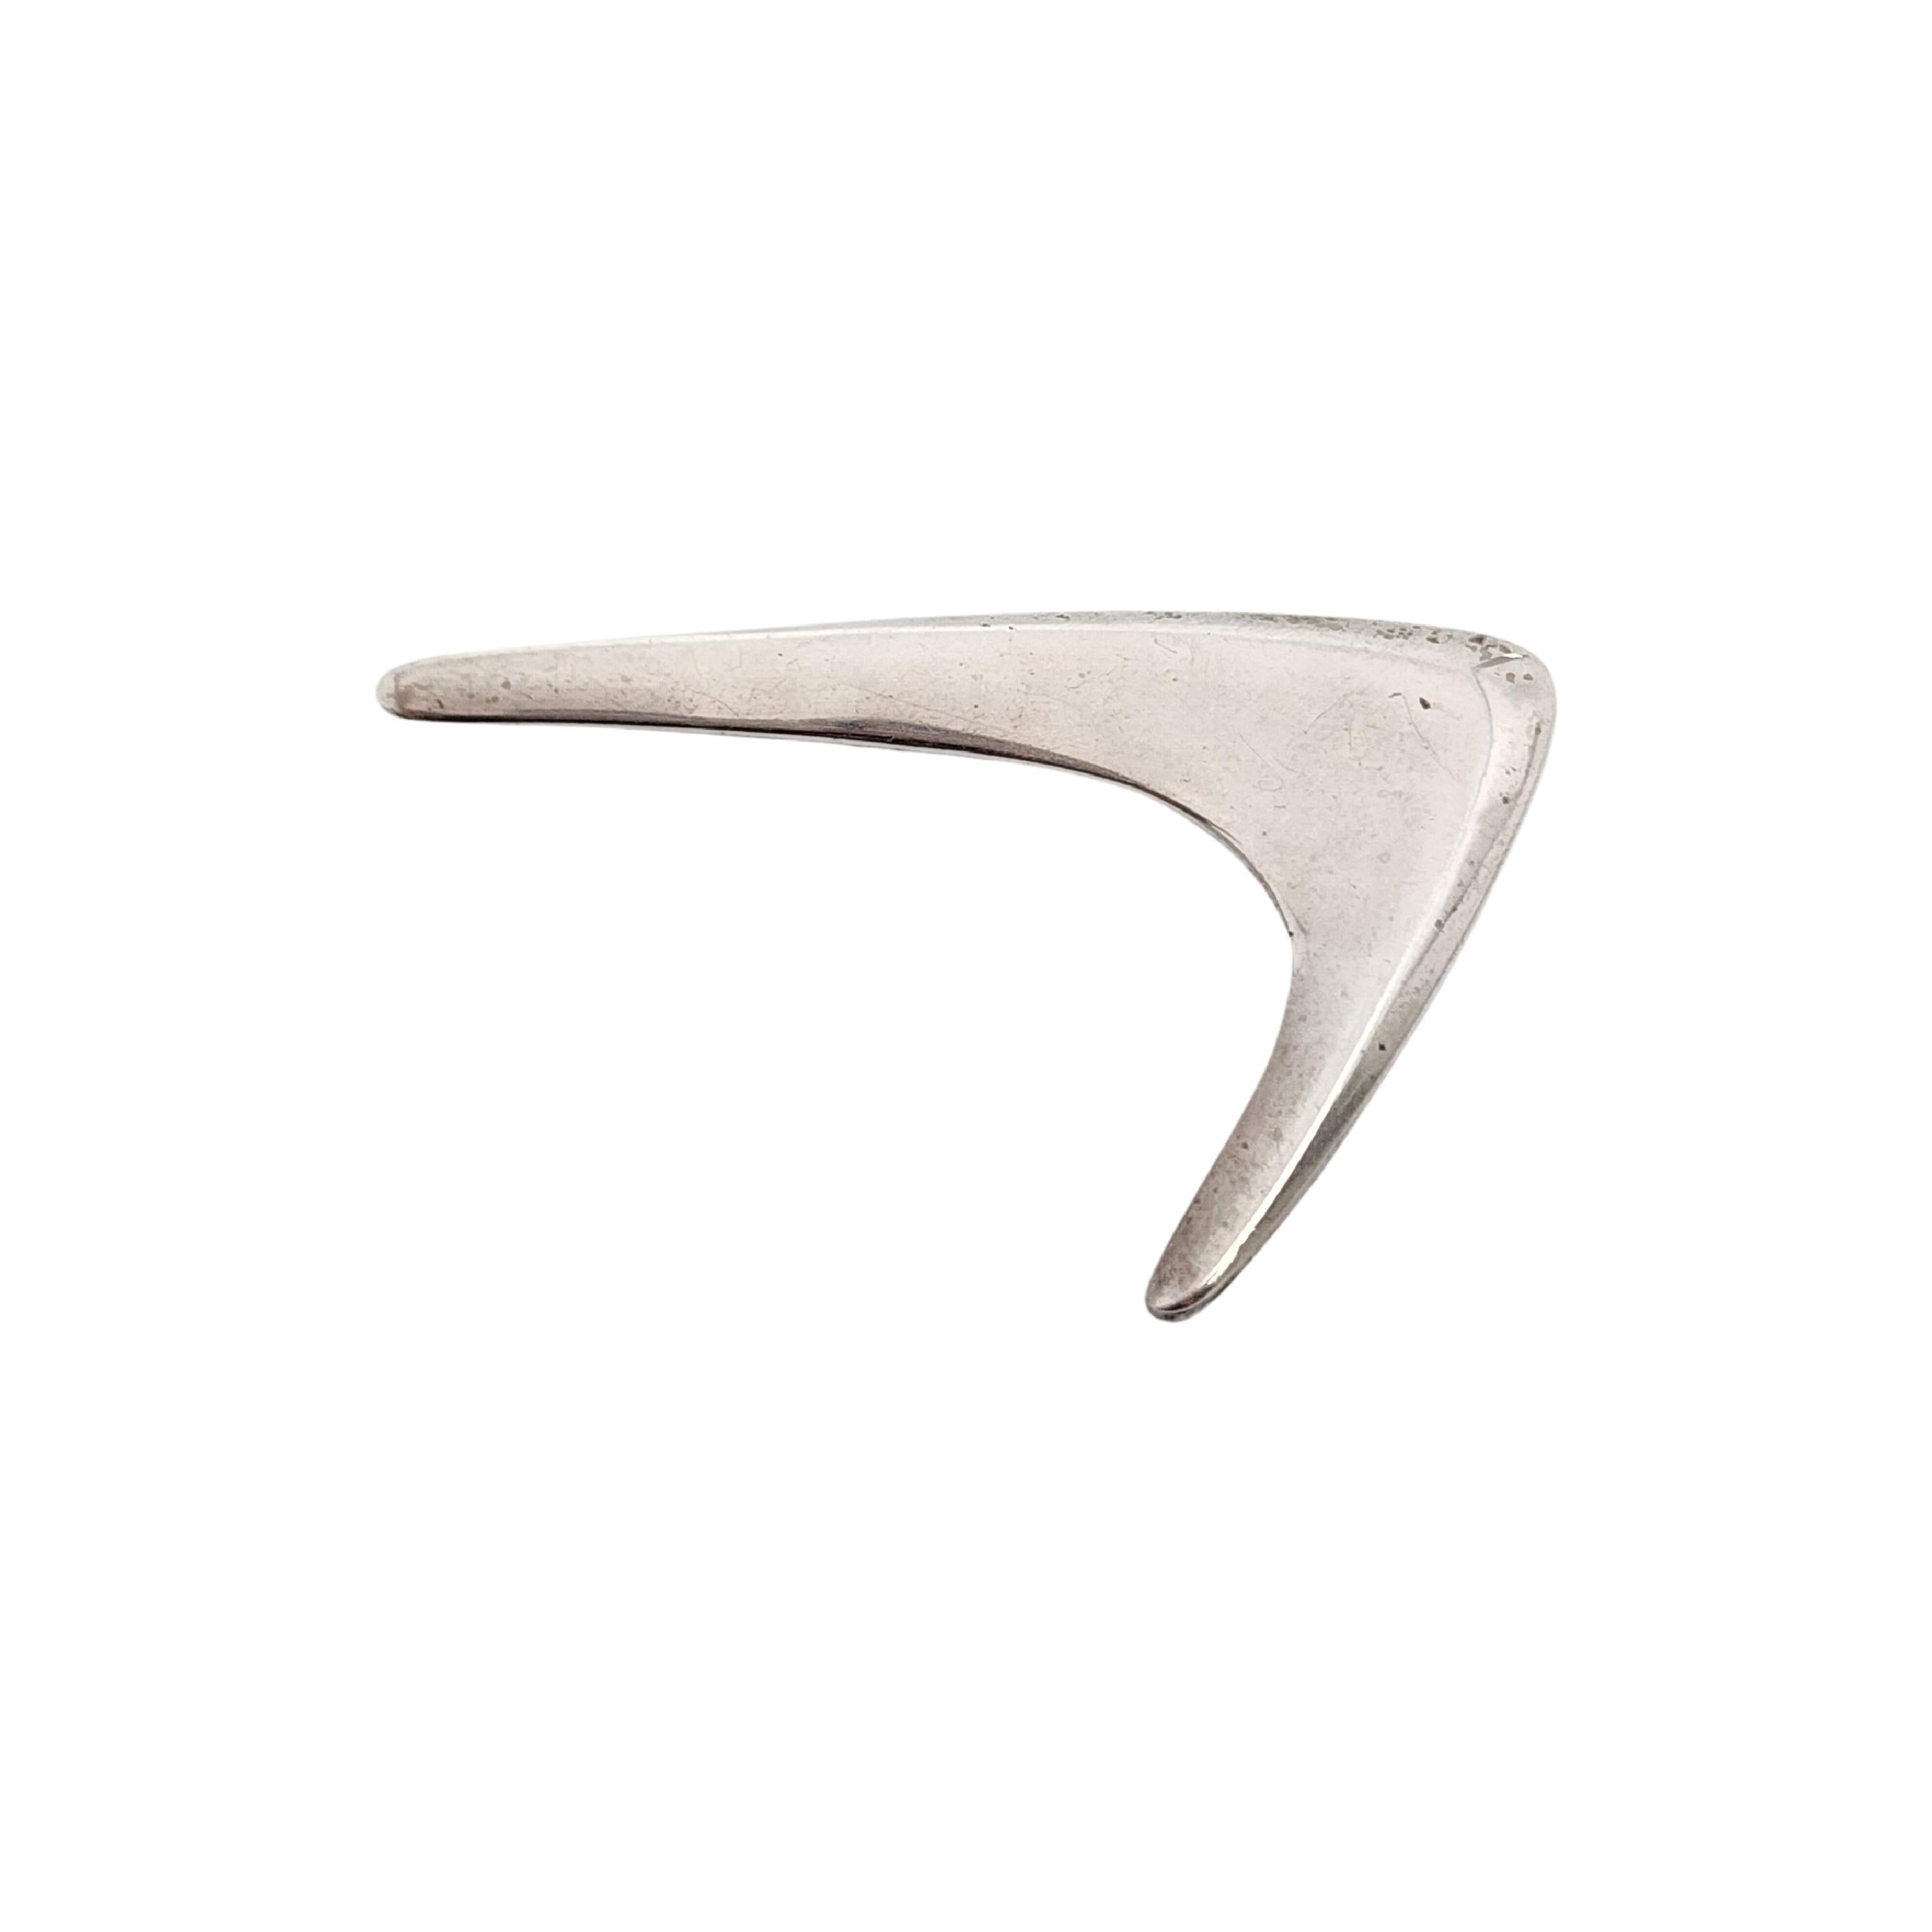 Épingle/broche boomerang en argent sterling par Hermann Siersbol du Danemark.

Épingle/broche moderniste en forme de boomerang.

Mesure environ 2 1/8